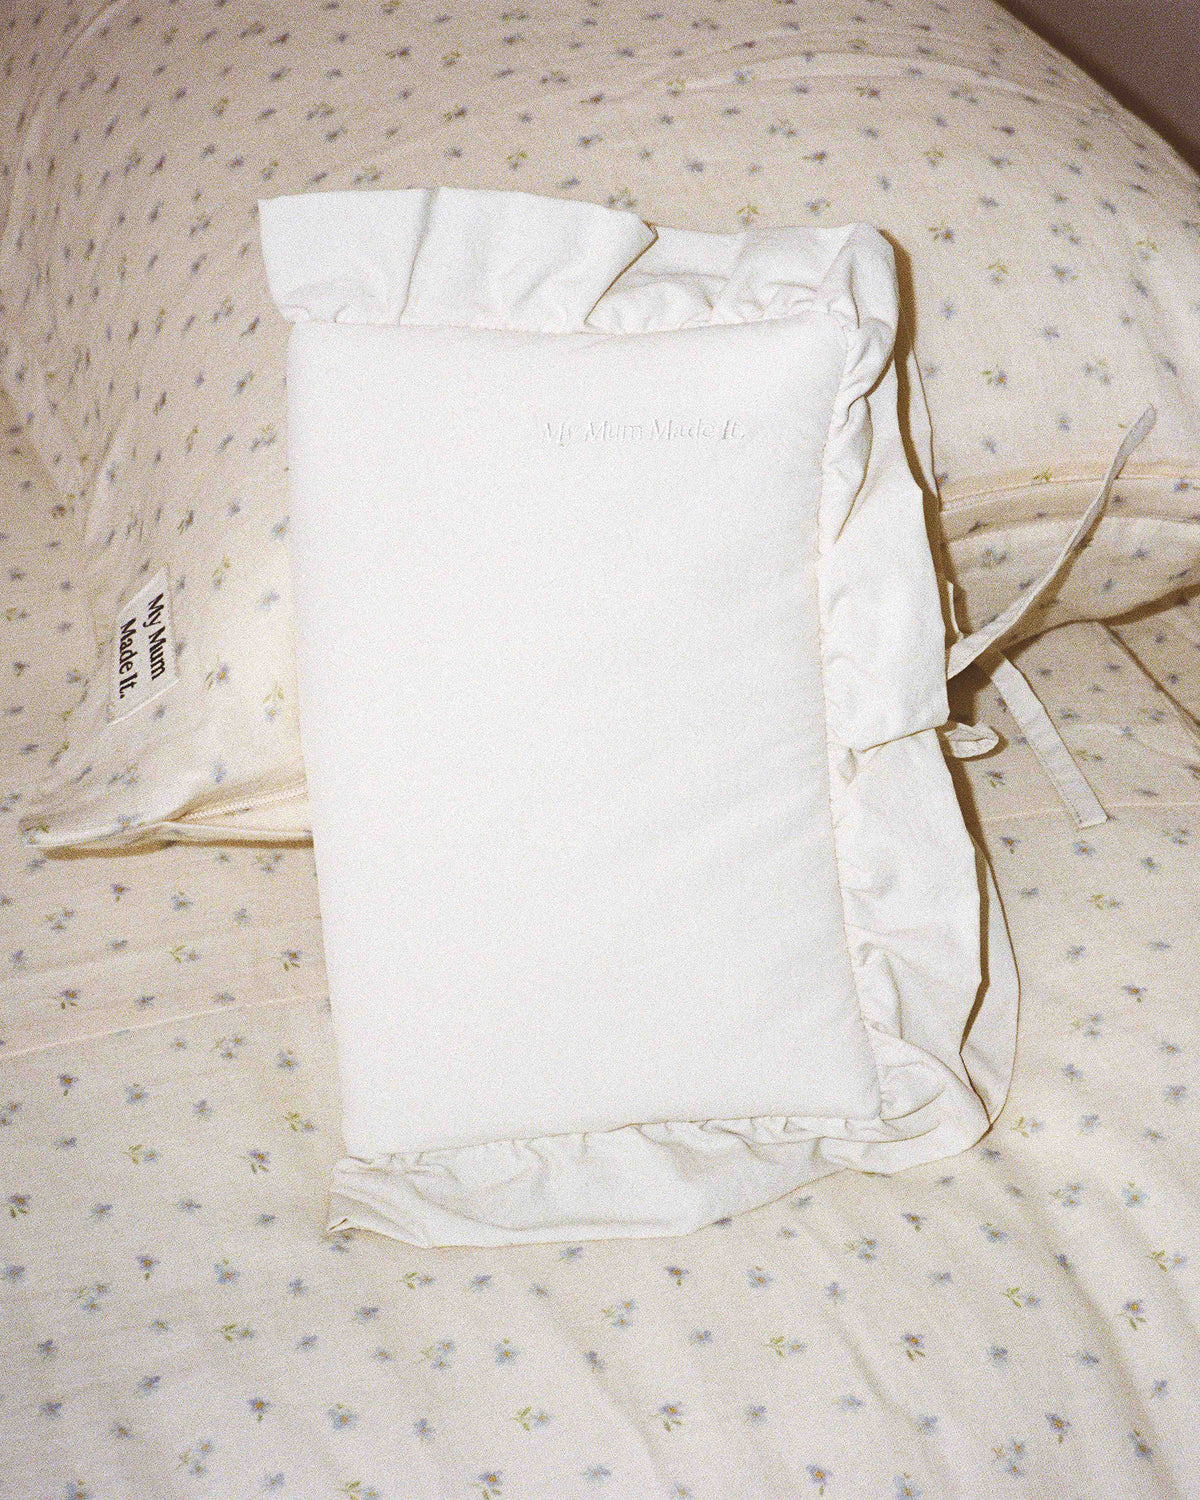 Pillow Secret Diary - Cream Frill